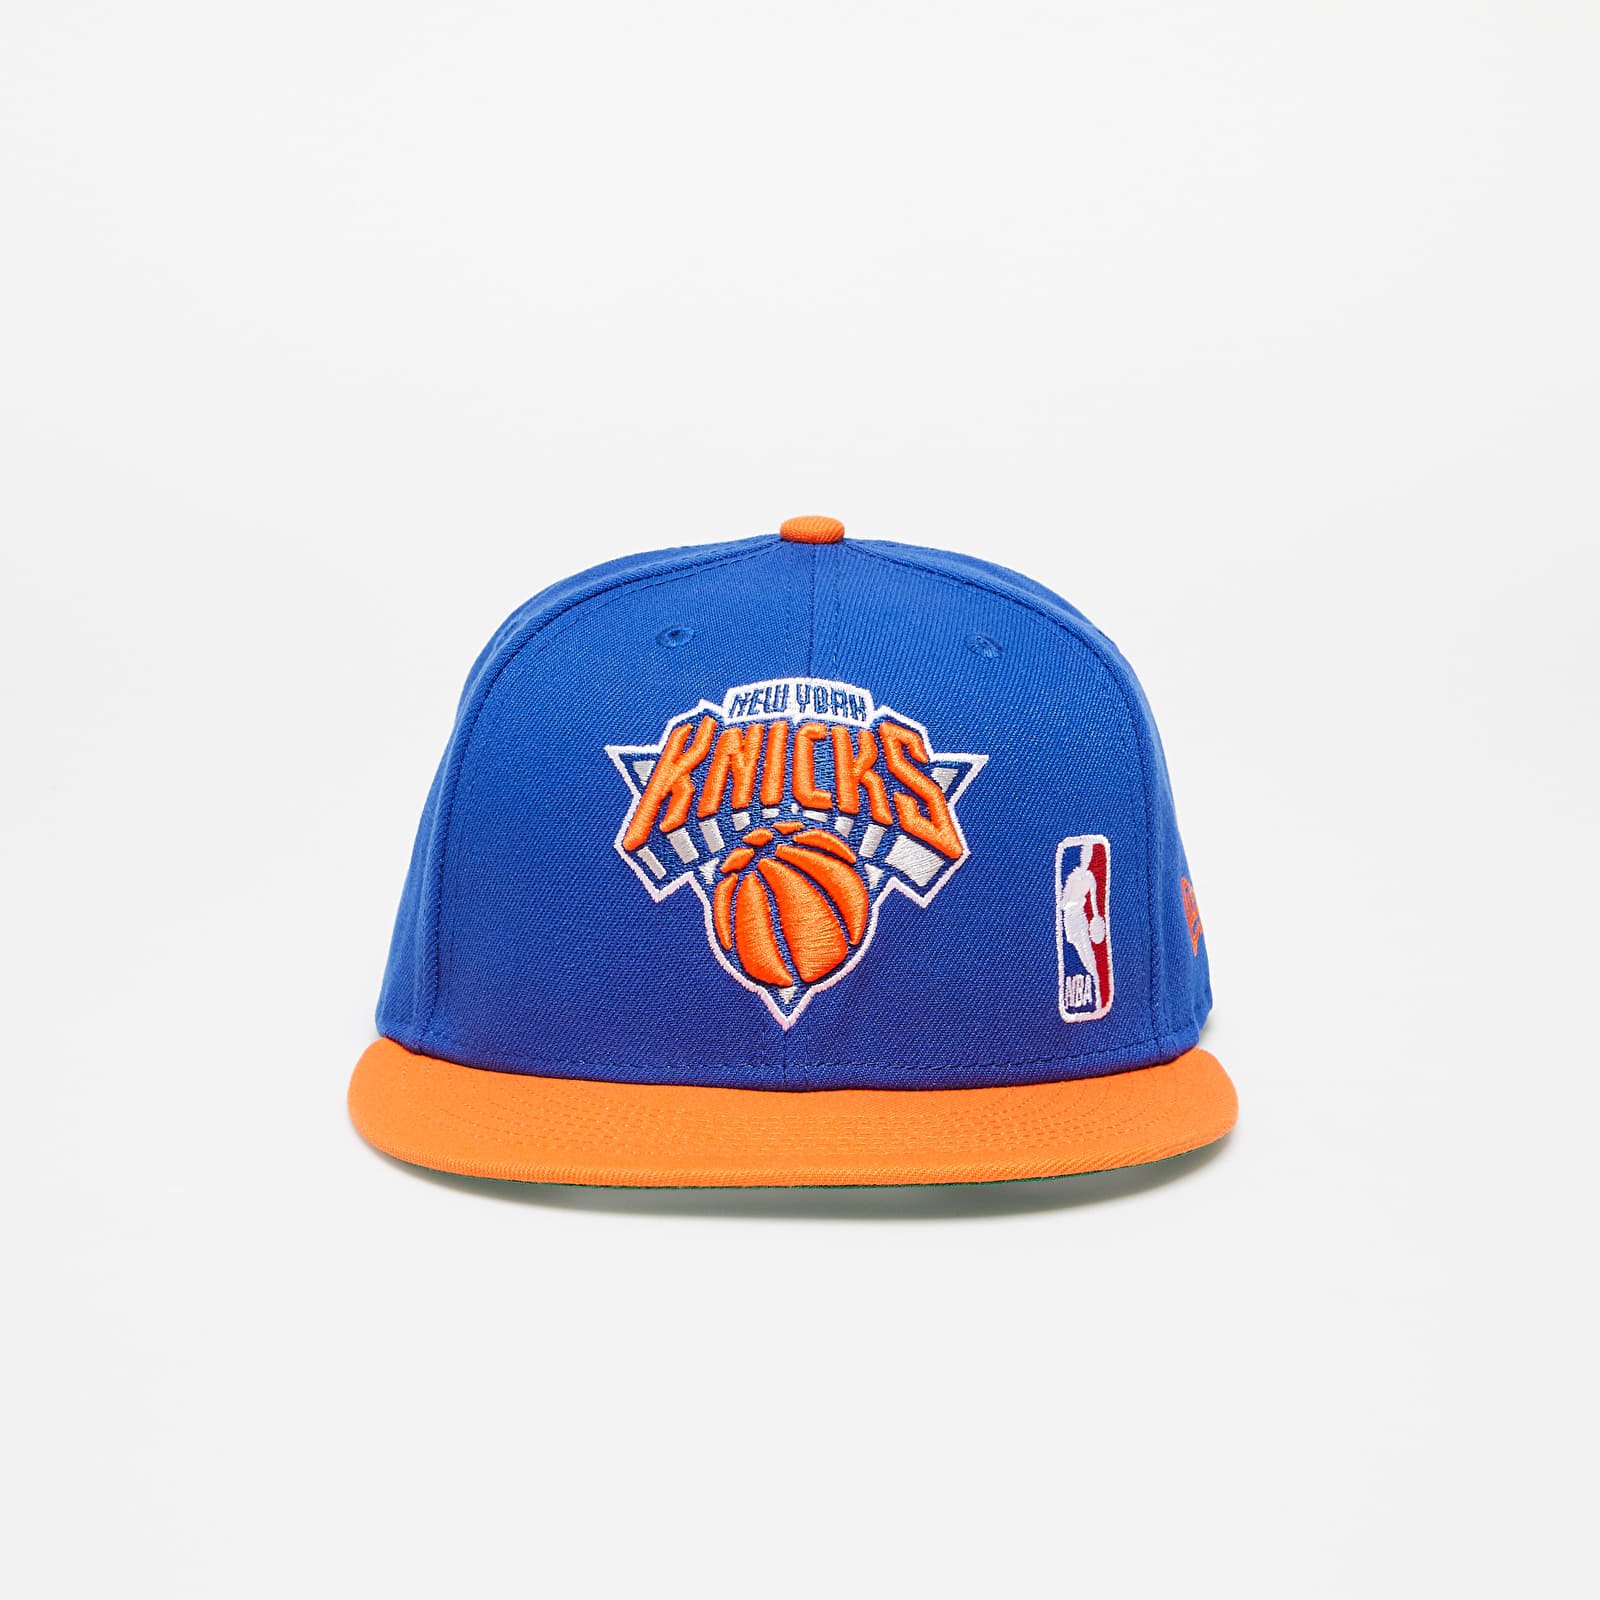 Caps New Era New York Knicks Team Arch 9FIFTY Snapback Cap Blue